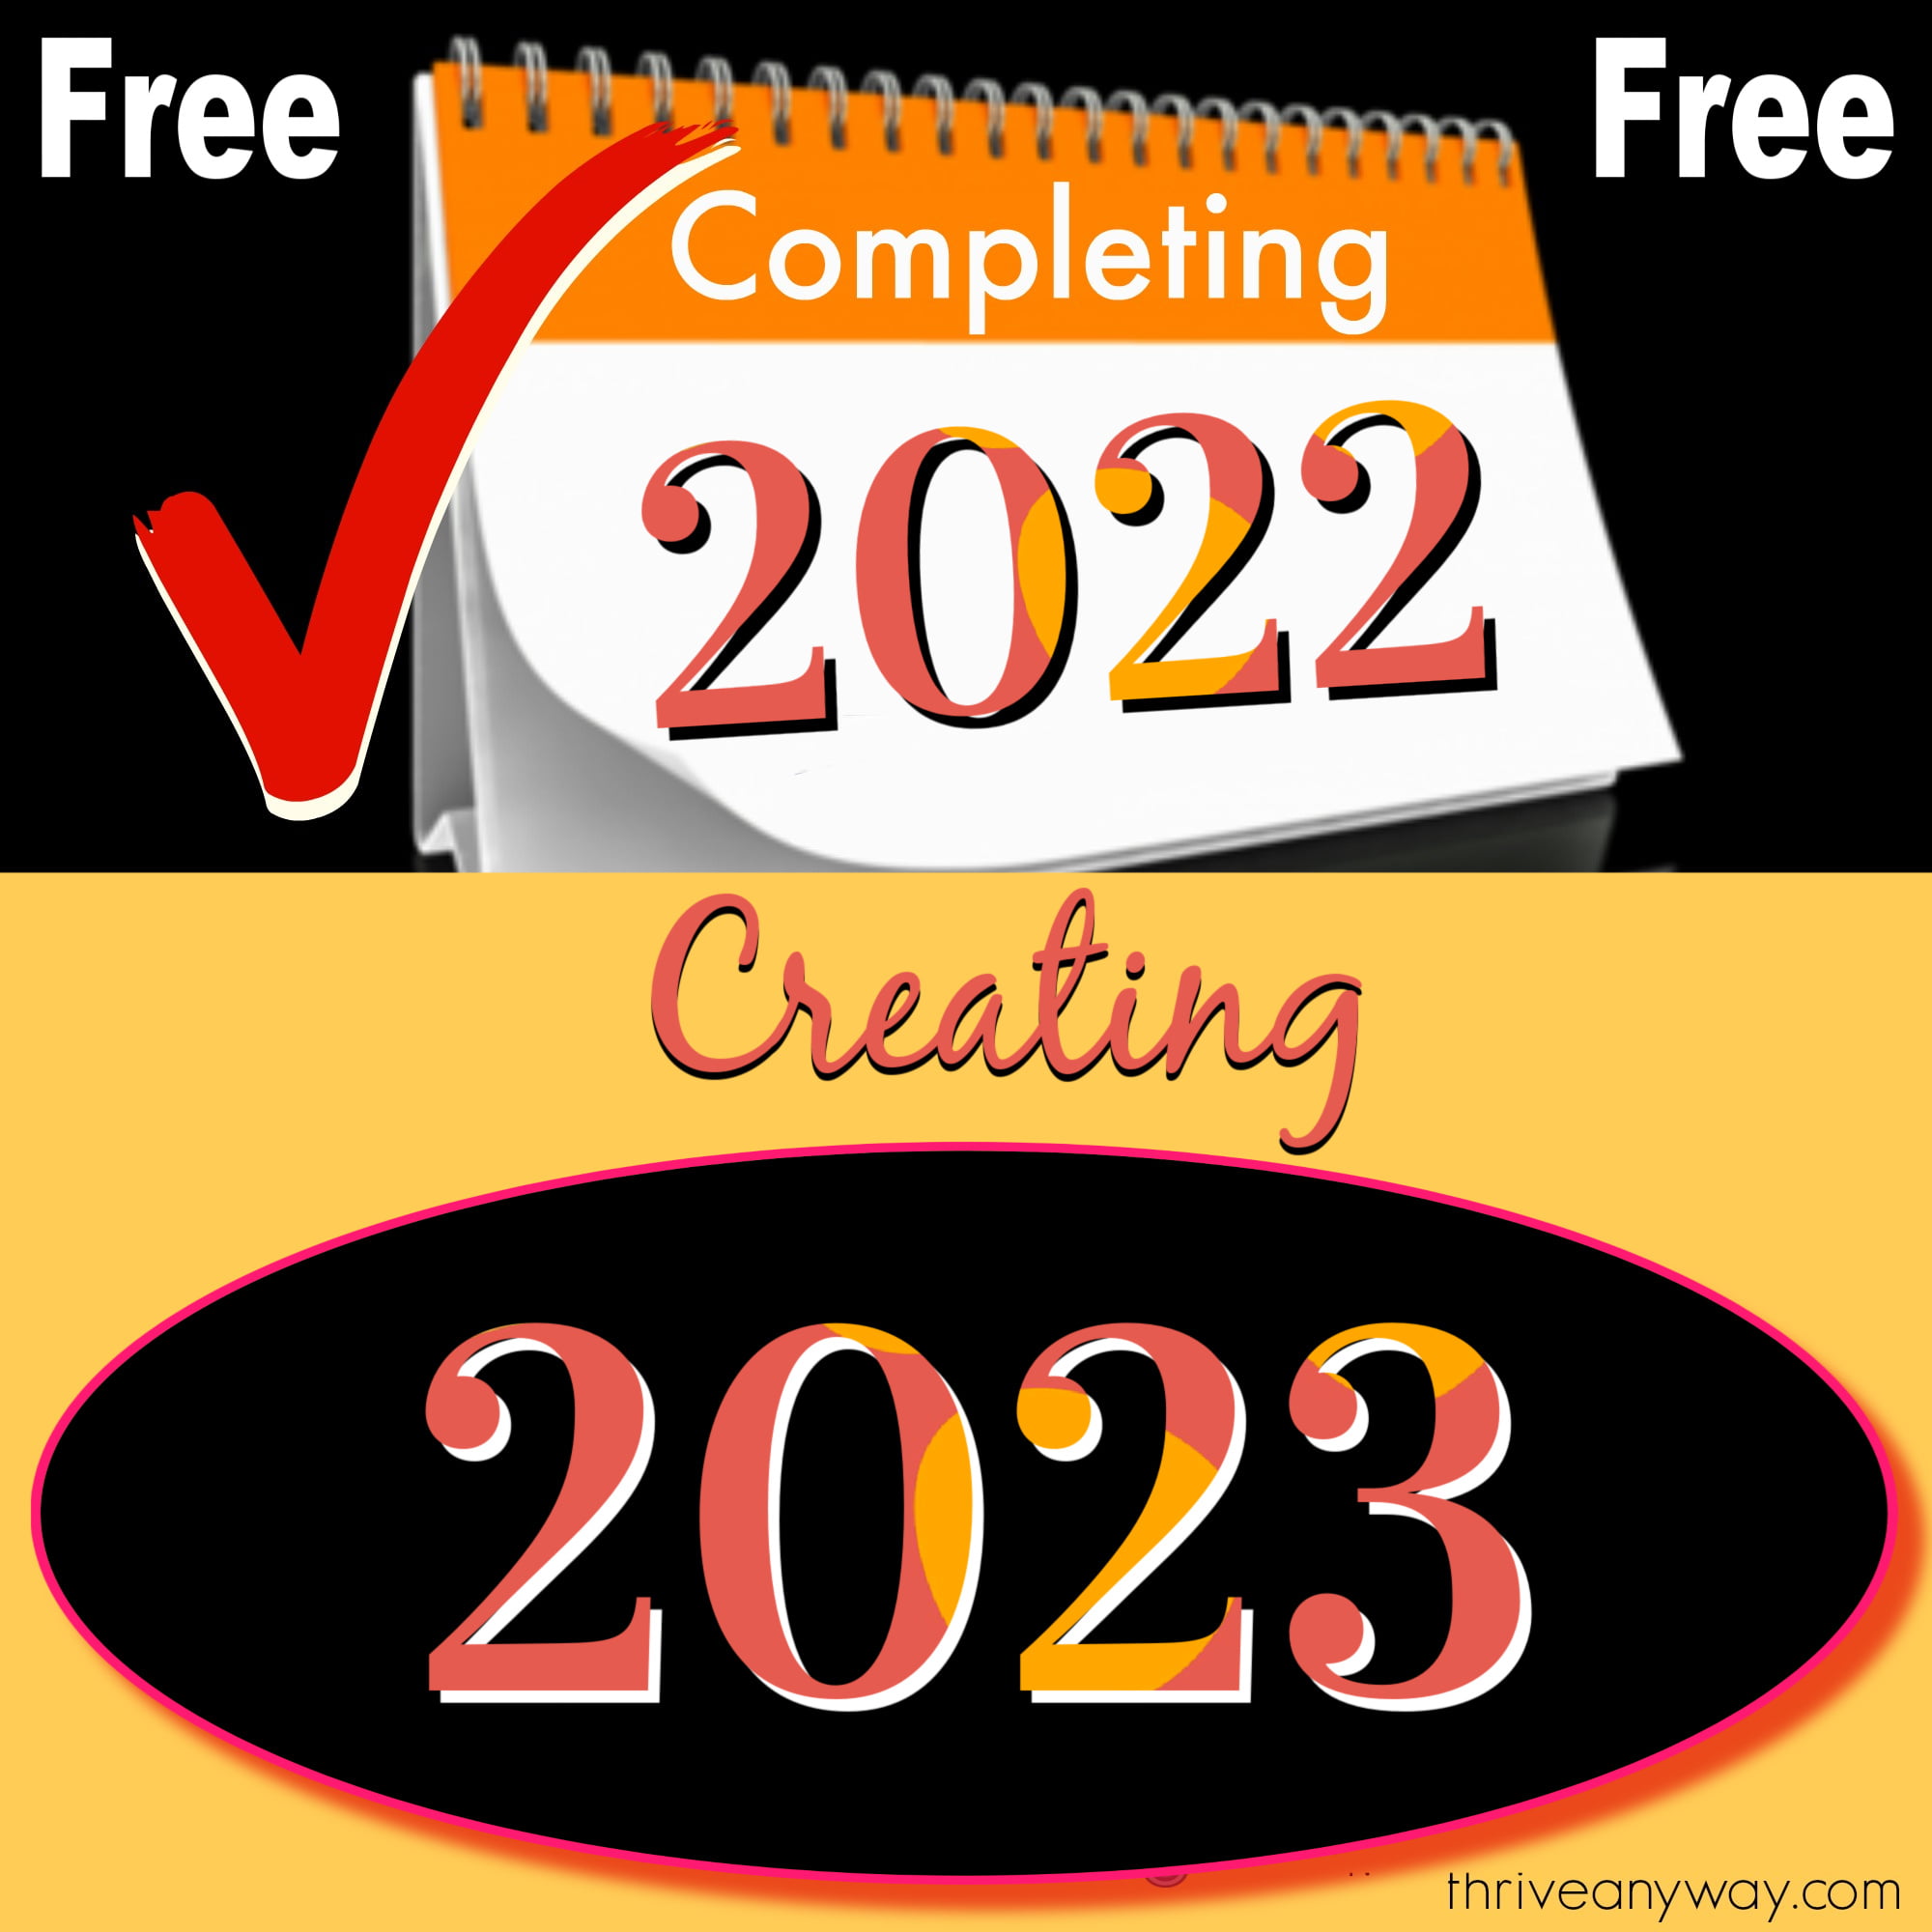 Completing 2022 Creating 2023 Fran Asaro Thrive Anyway